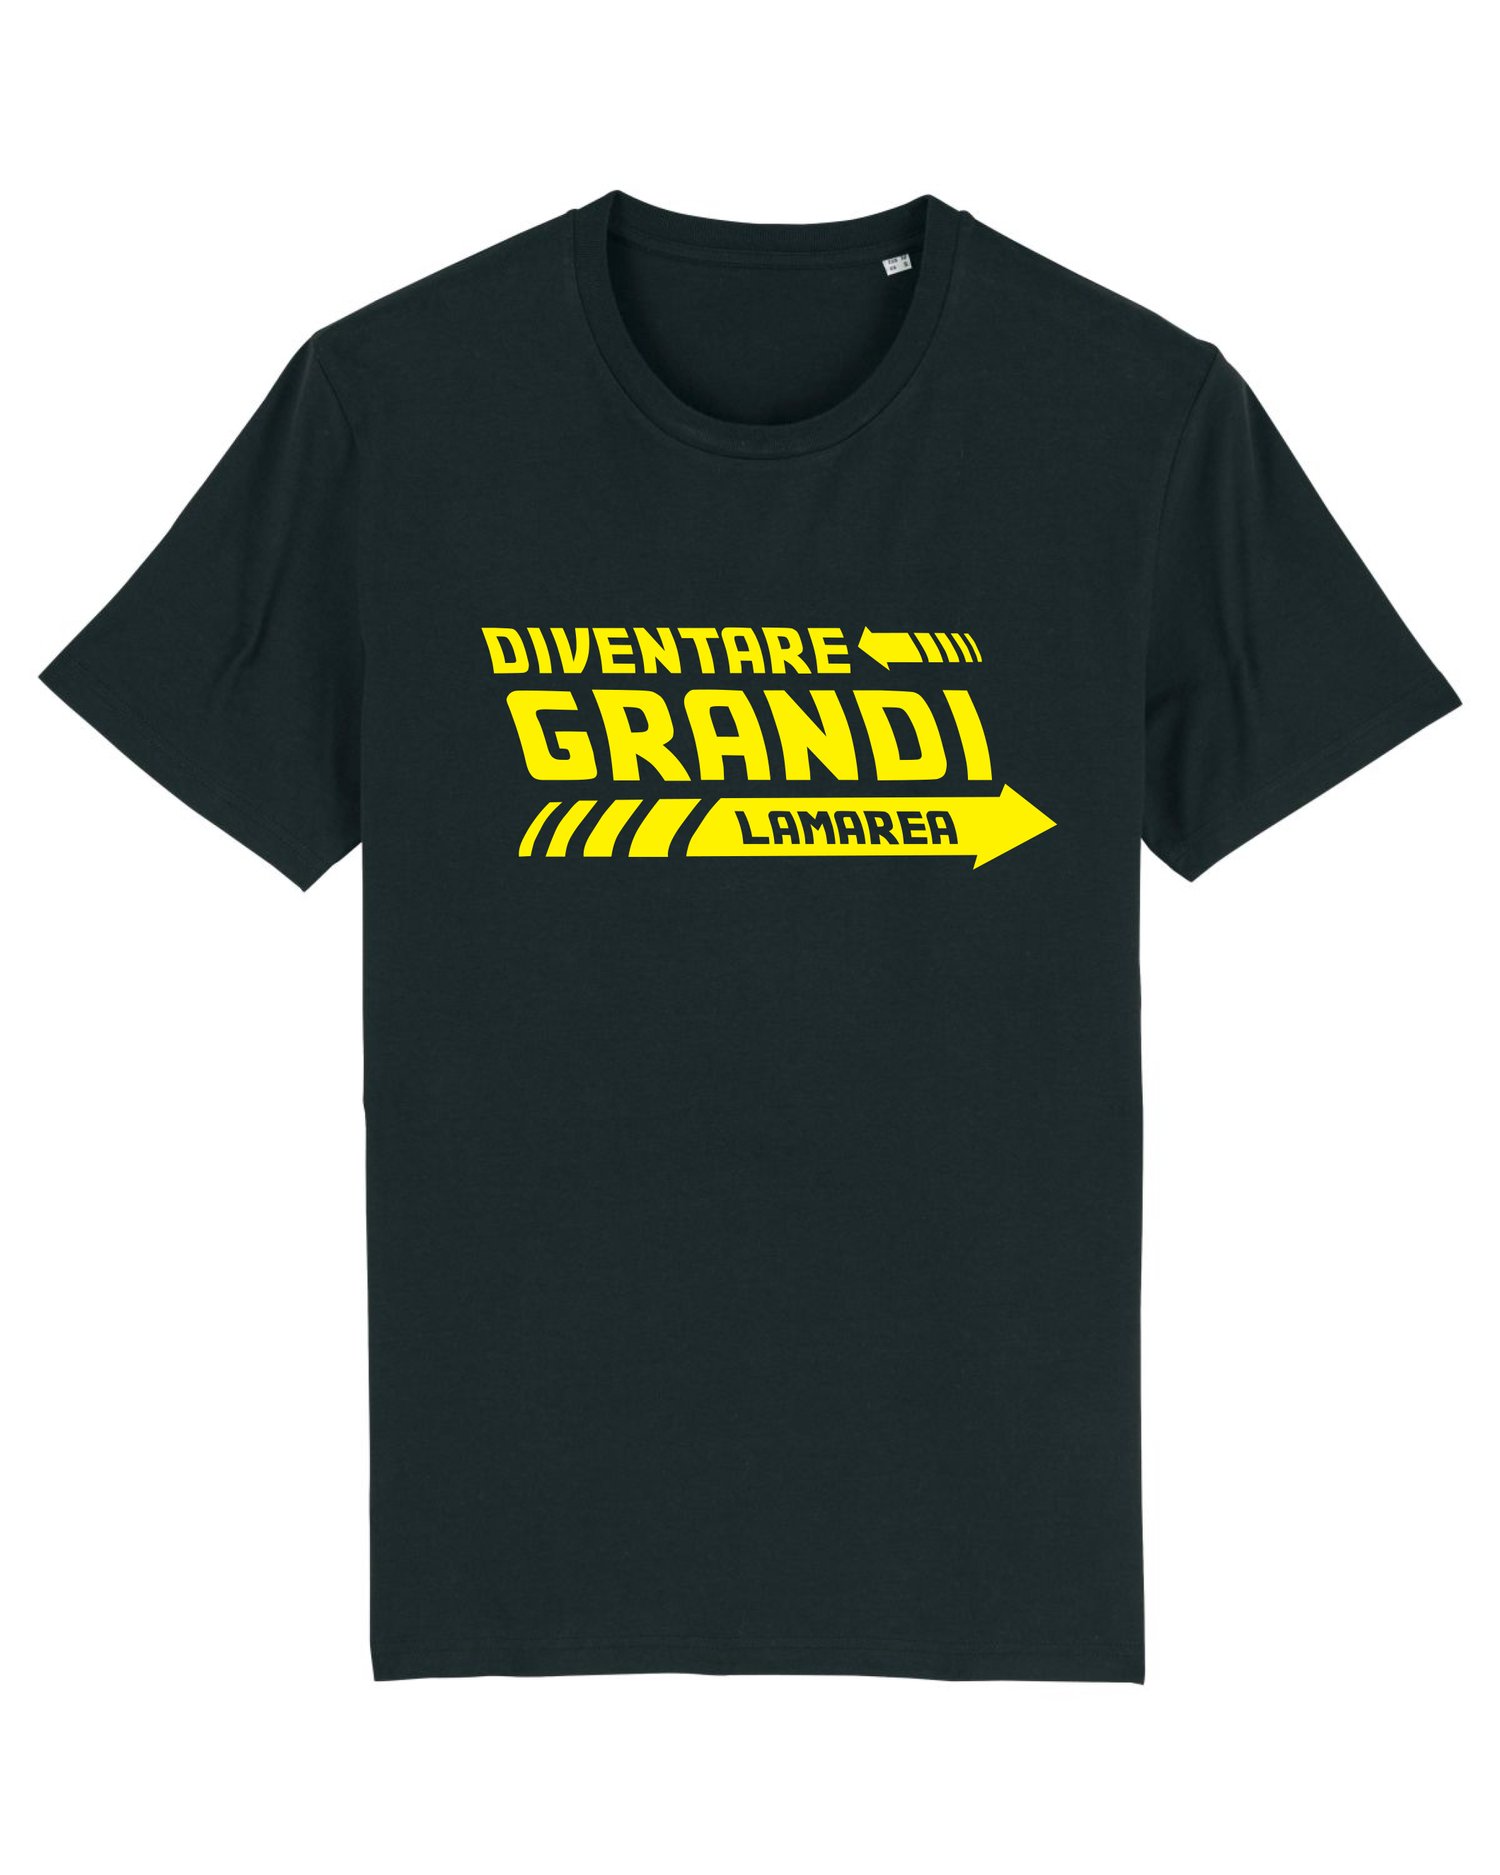 Image of T-Shirt "Diventare grandi" (2021)